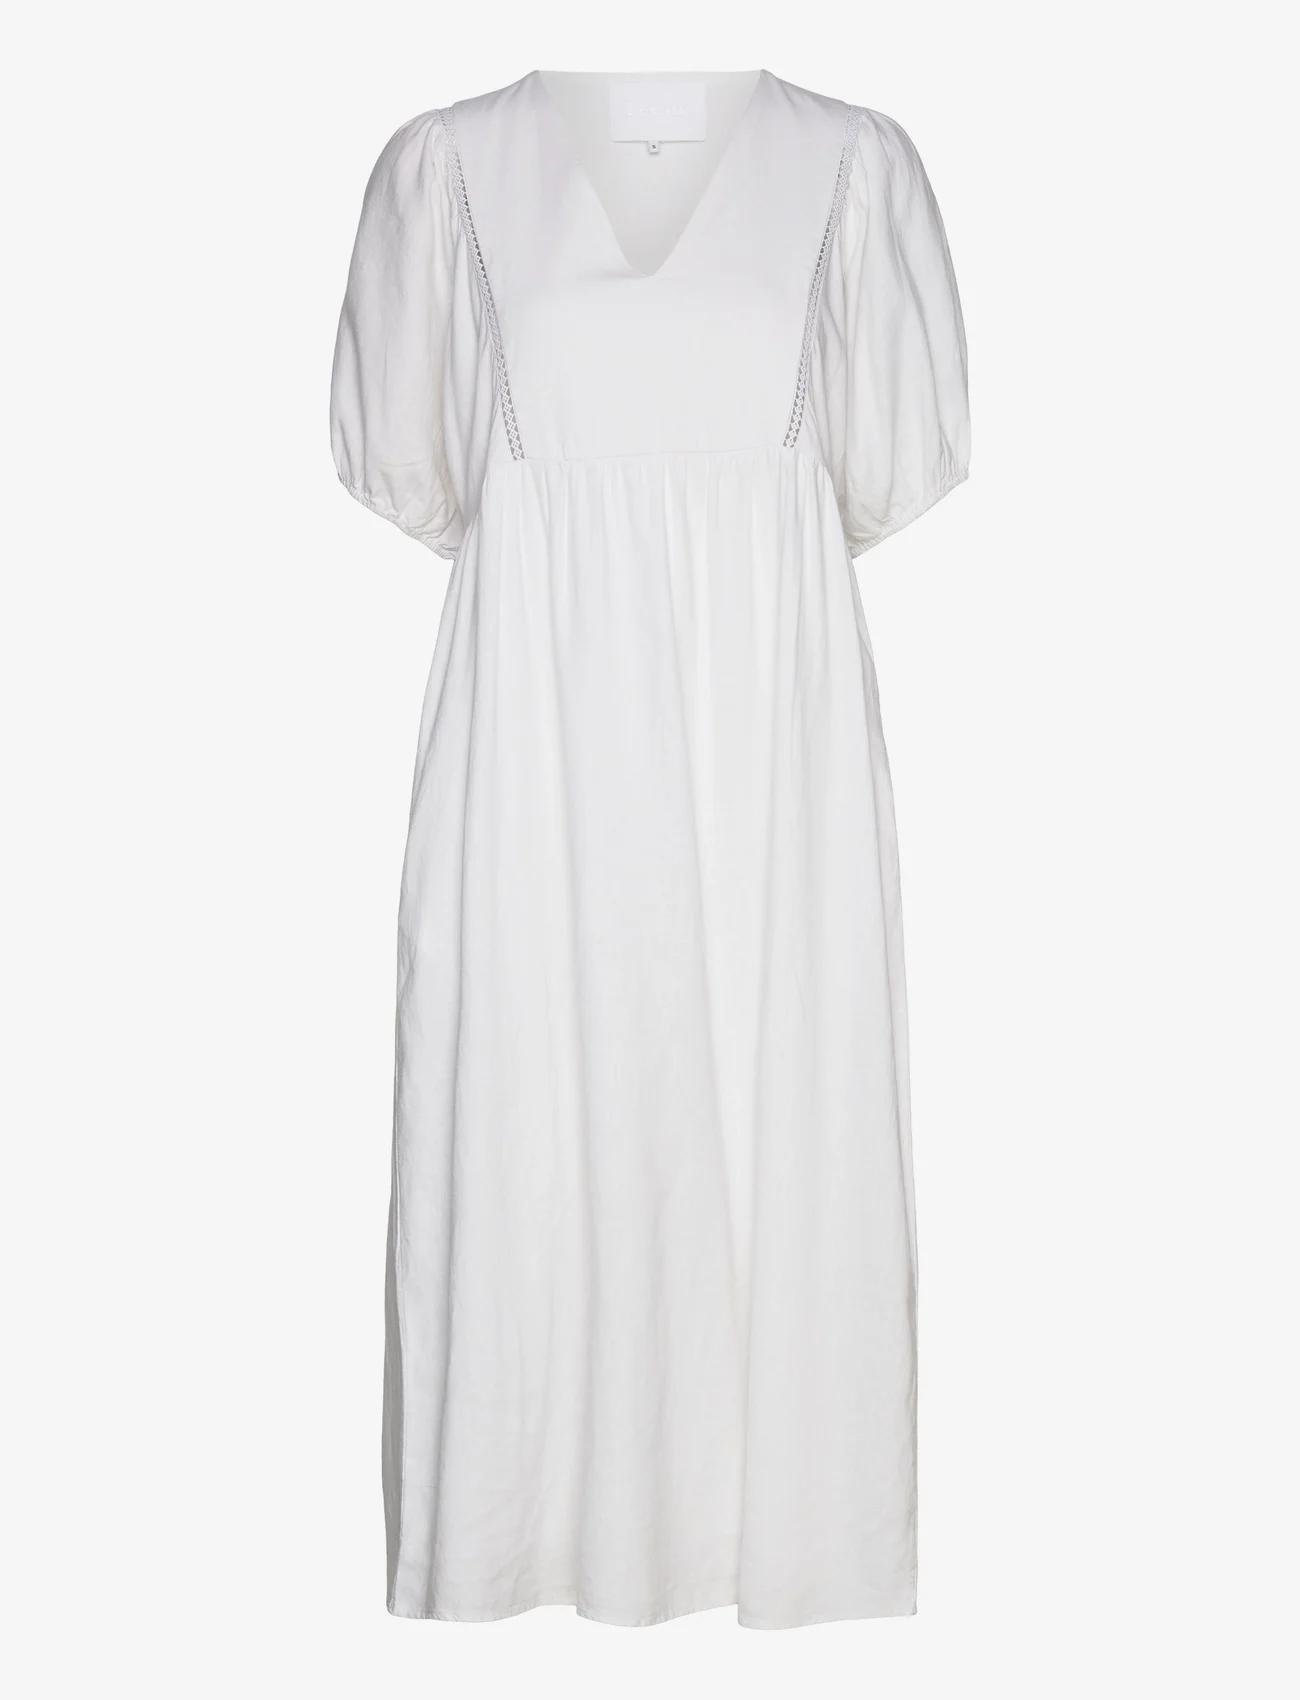 Levete Room - LR-NAJA - sukienki koszulowe - l100 - white - 0